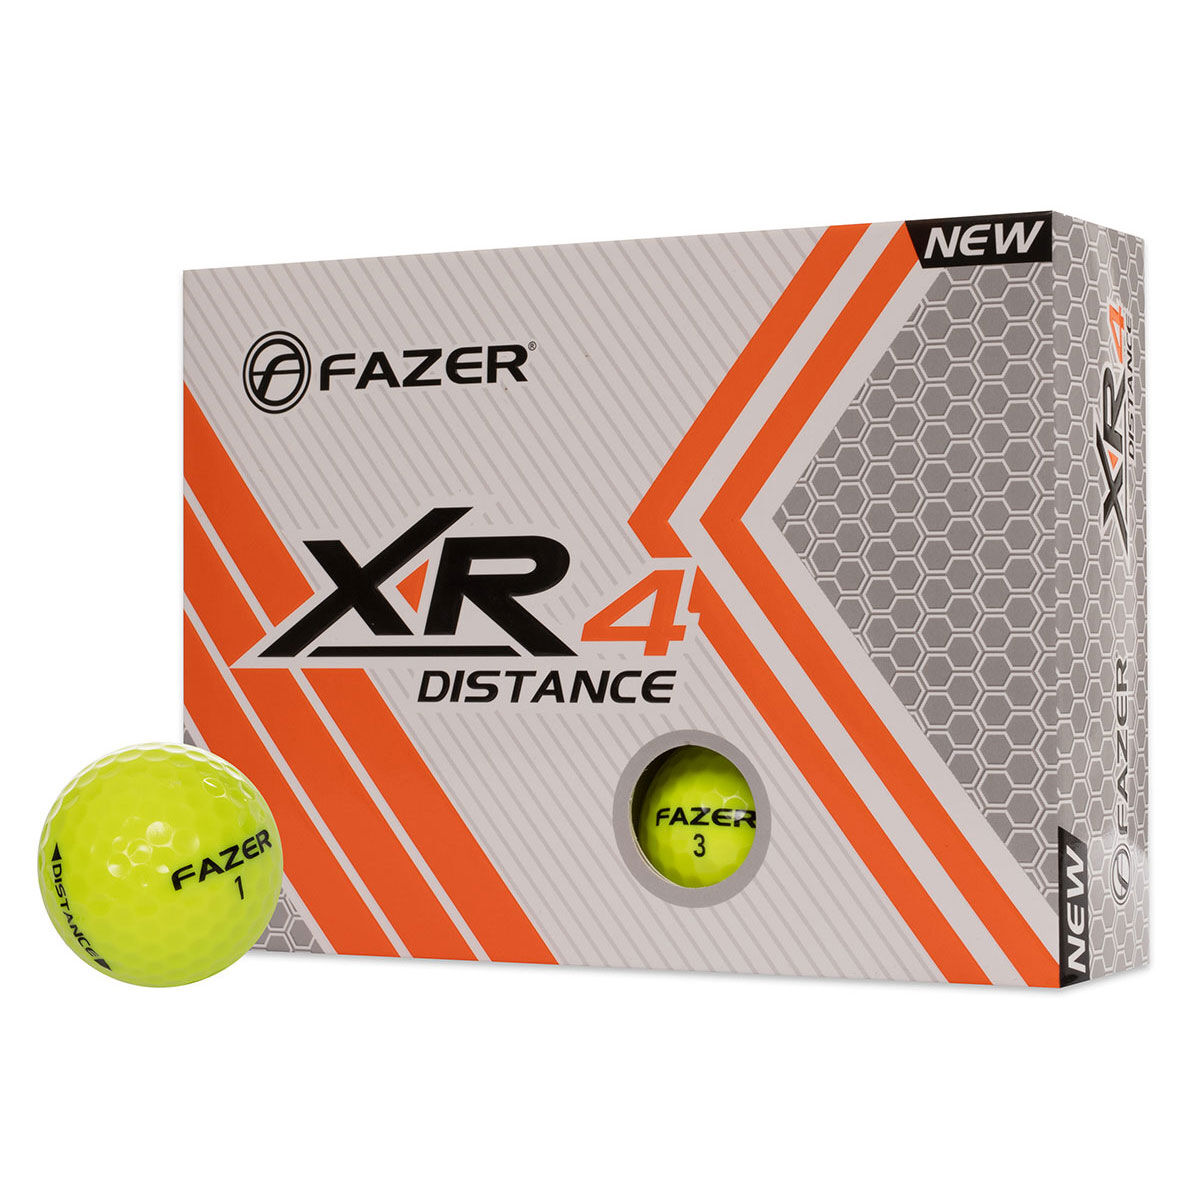 Fazer XR4 Distance 12 Golf Ball Pack, Male, Yellow, One Size | American Golf